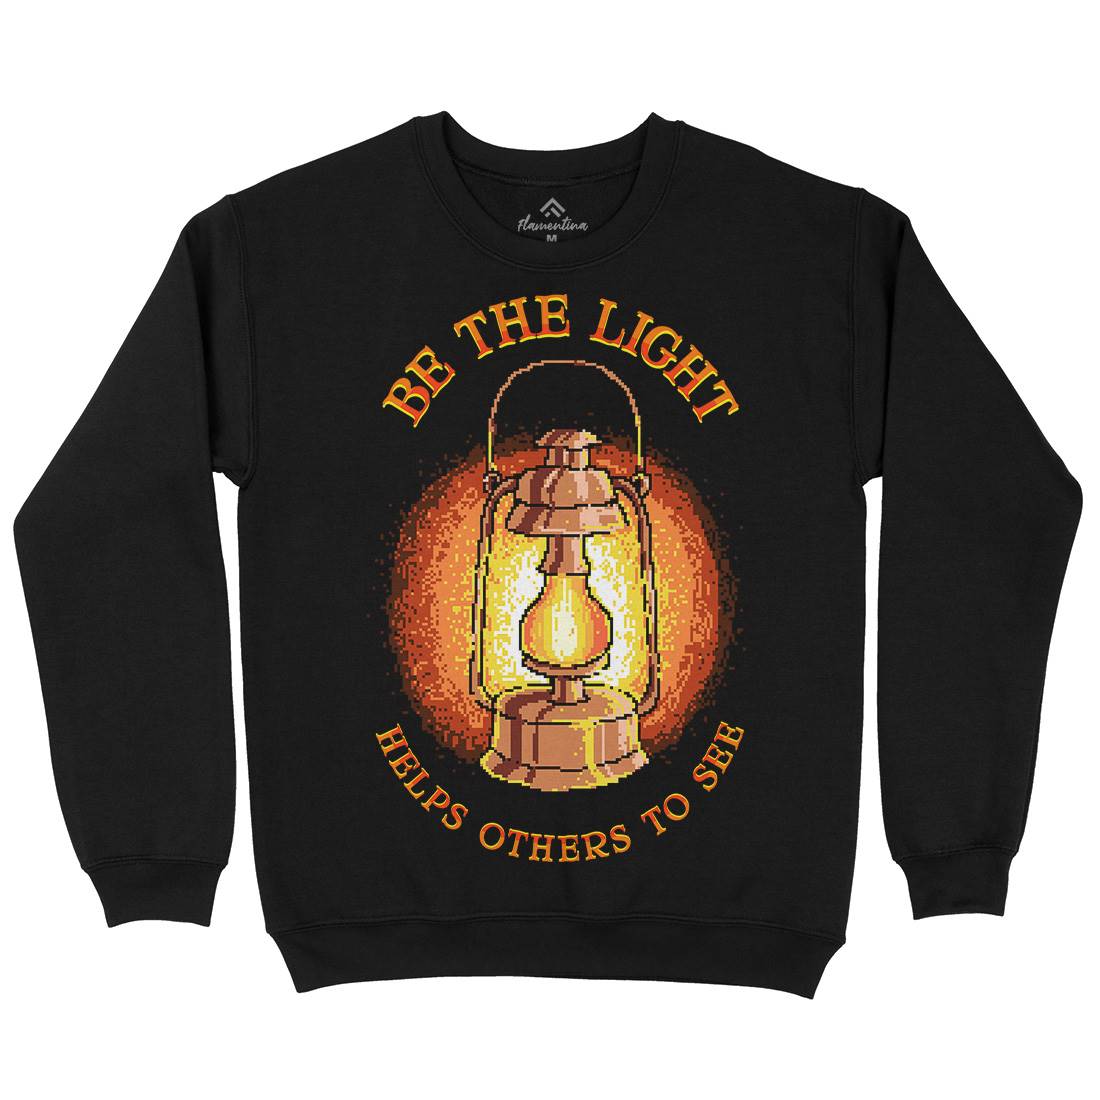 Be The Light Kids Crew Neck Sweatshirt Retro B886